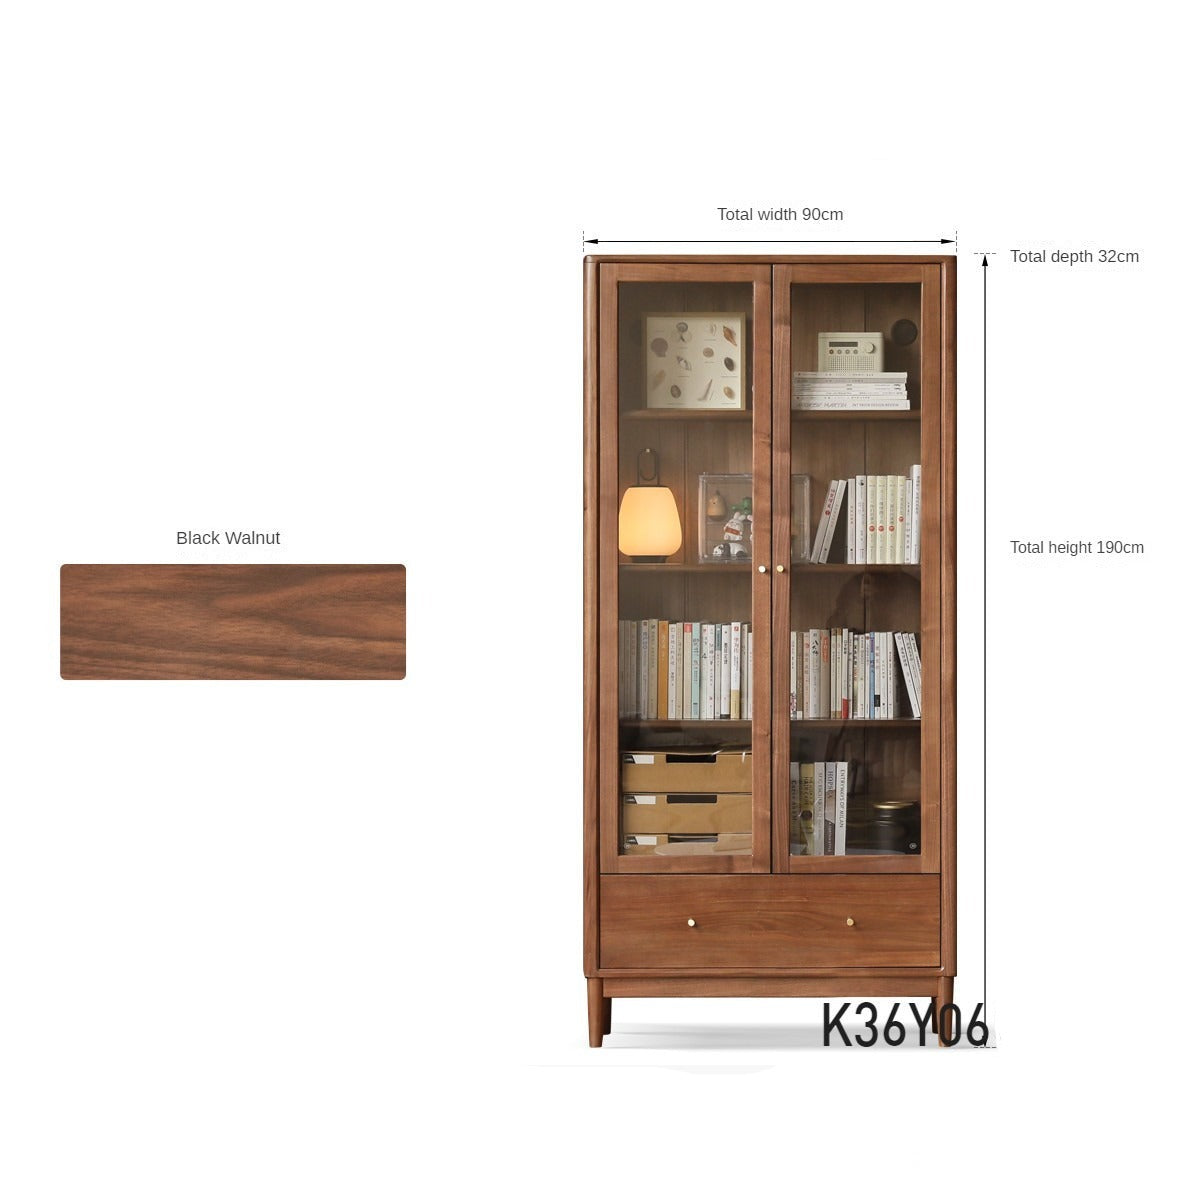 Black walnut solid wood bookcase whole wall free combination bookshelf "